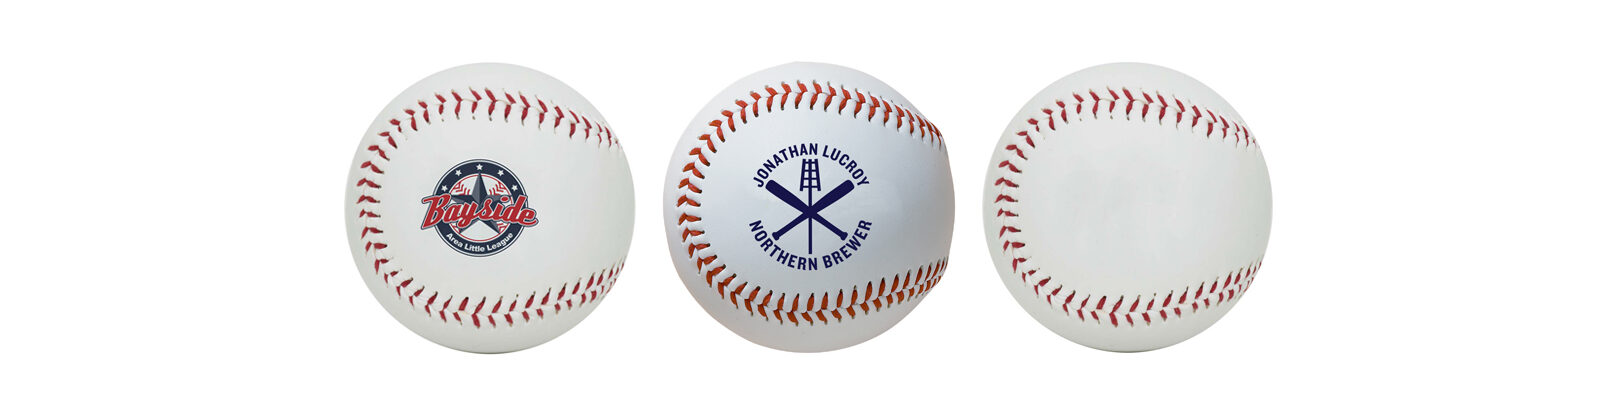 3" Promotional Baseballs